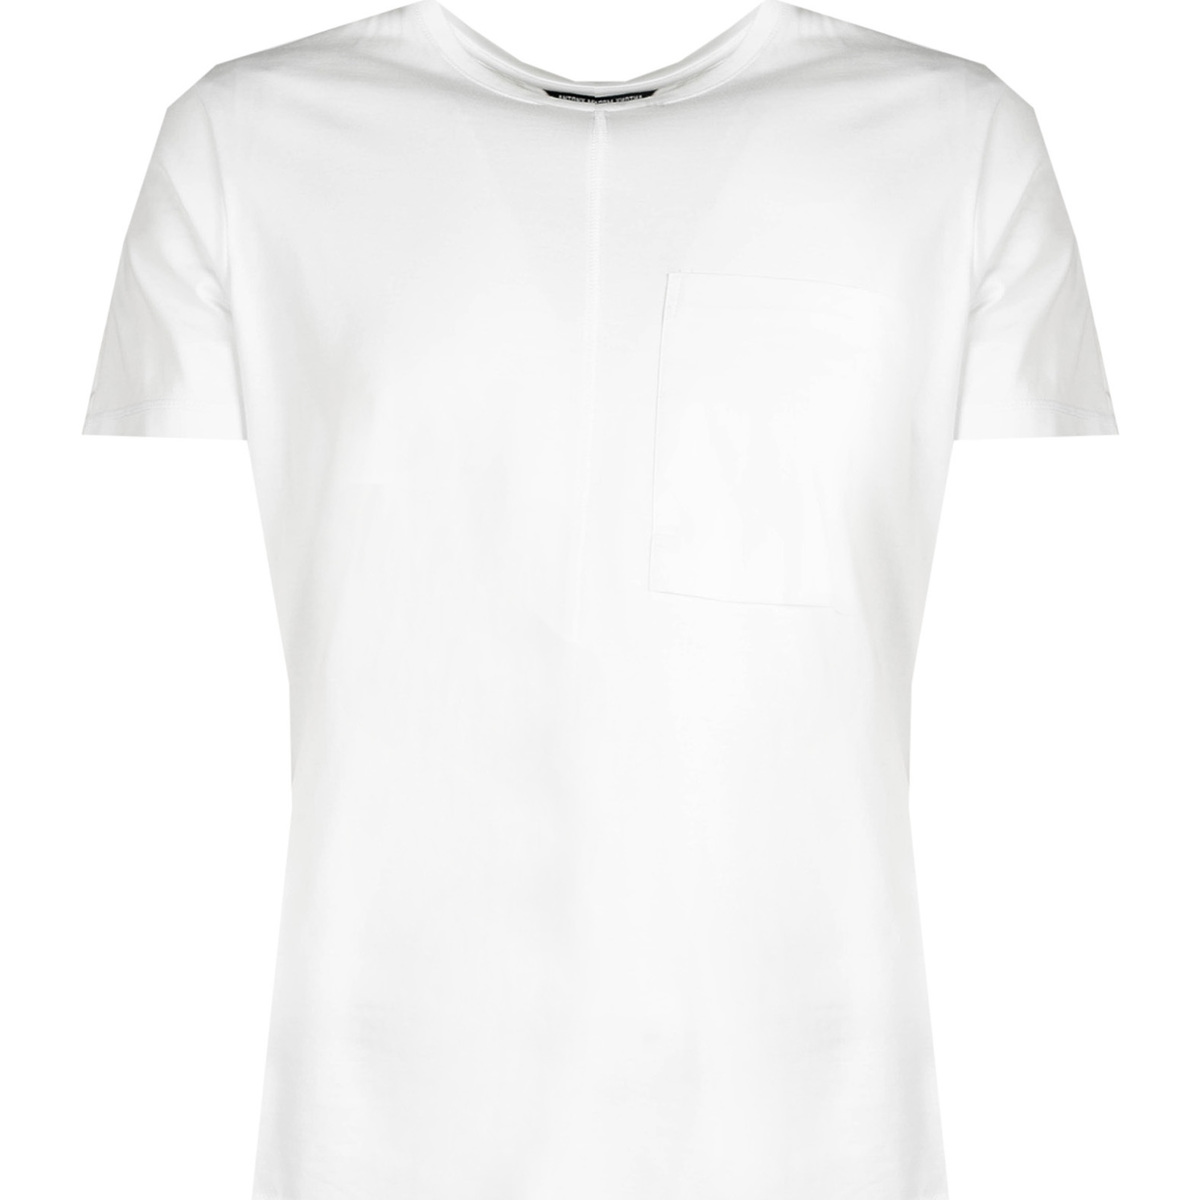 Kleidung Herren T-Shirts Antony Morato MMKS01927 FA100227 Weiss